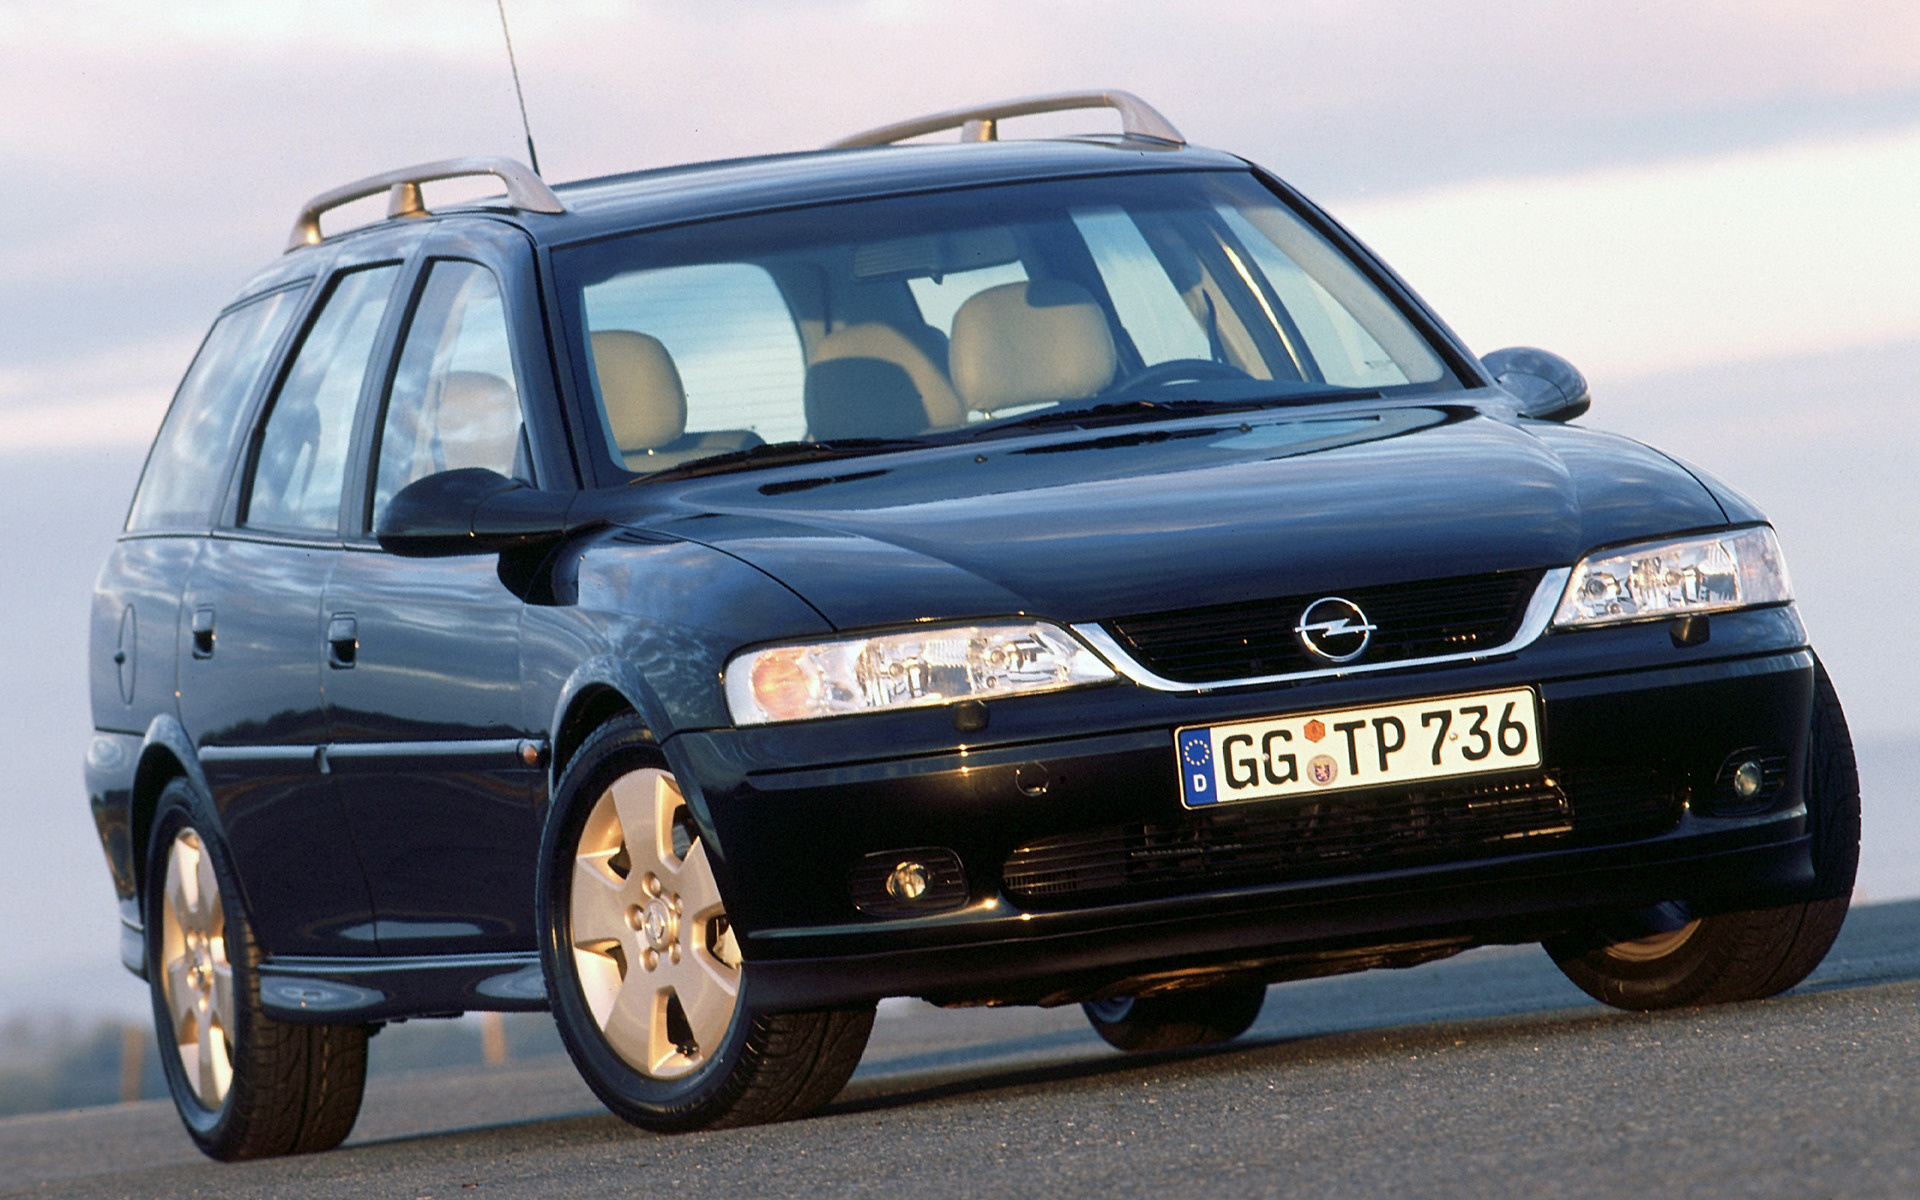 Опель универсал 2000. Opel Vectra 2000 универсал. Opel Vectra Caravan 2000. Опель Вектра 1999 универсал. Opel Vectra b 2000 Universal.